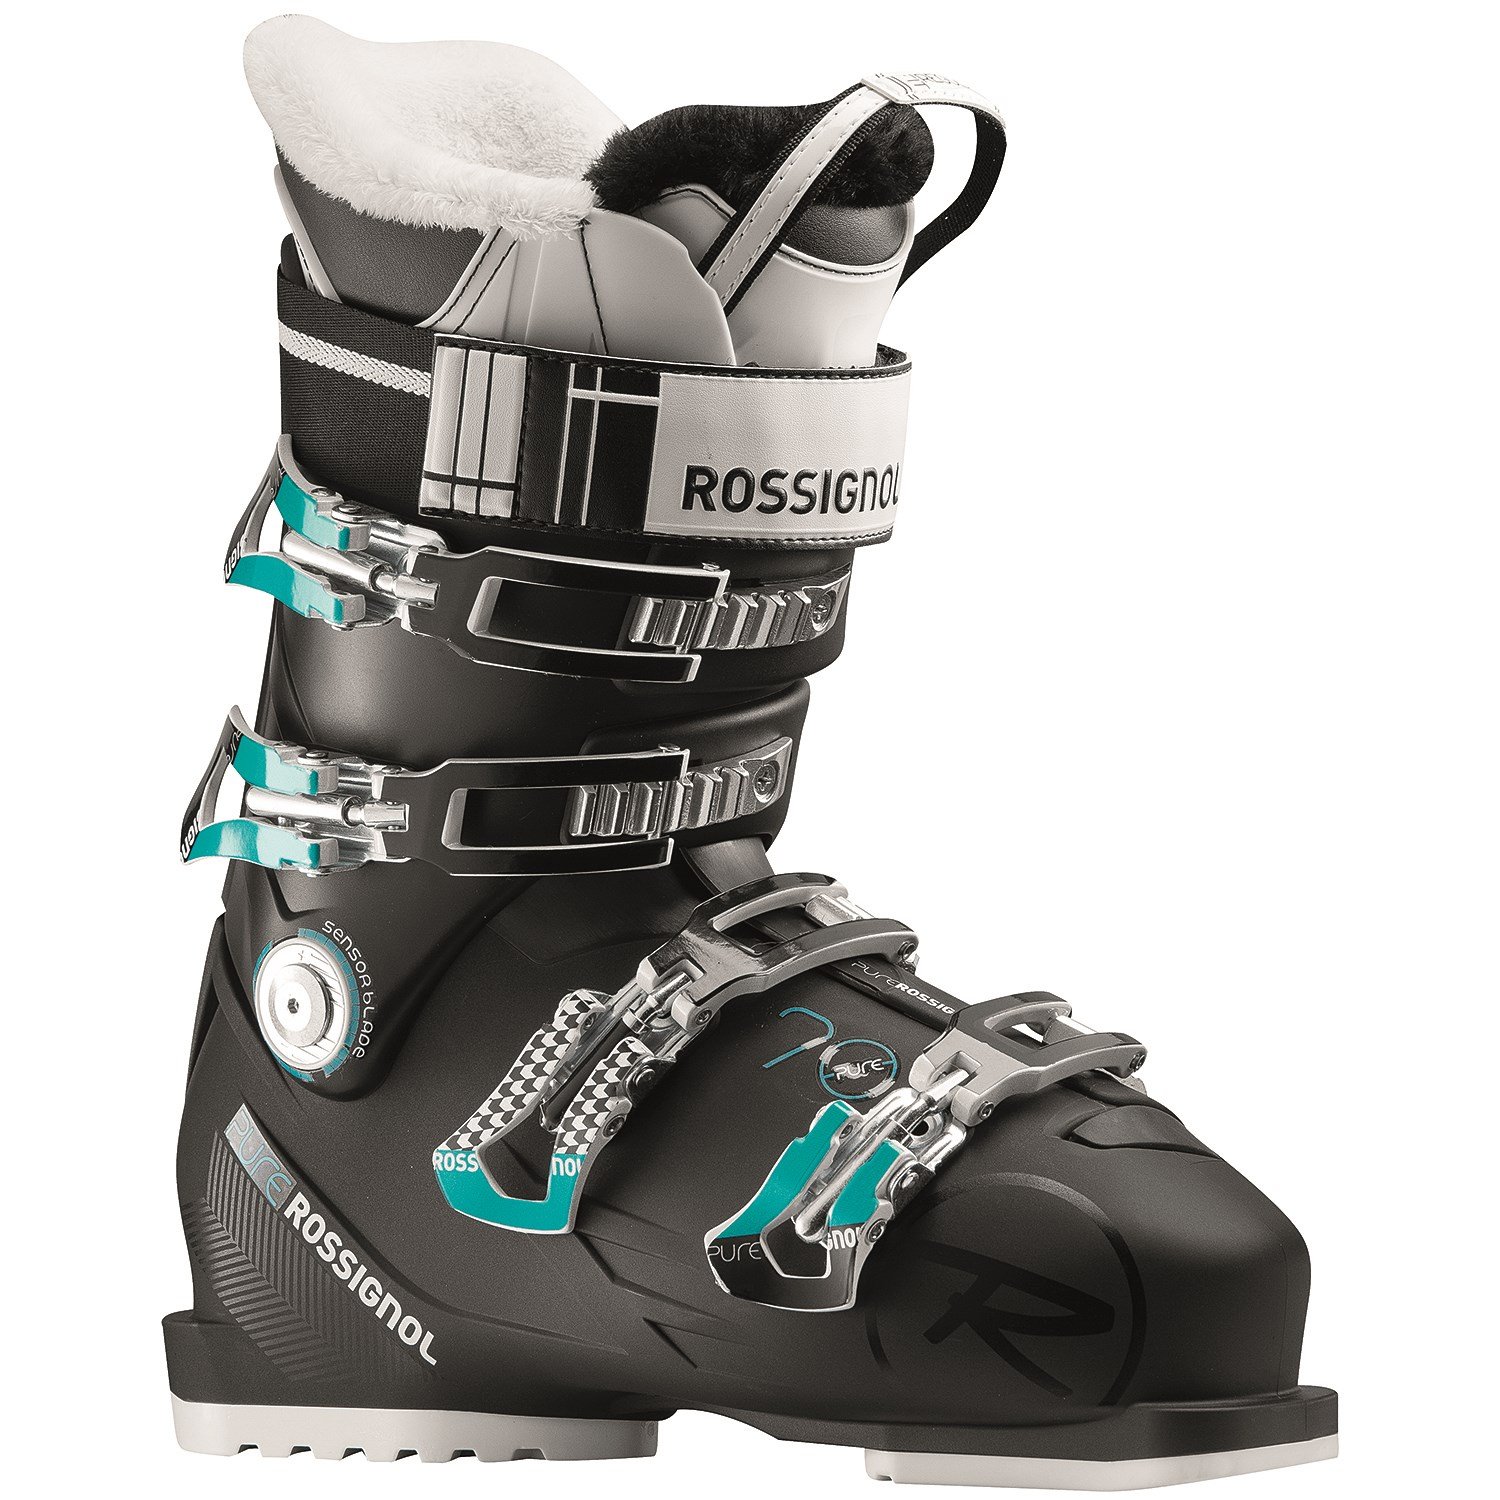 Bedrog passage salade Rossignol Pure 70 Ski Boots - Women's 2018 | evo